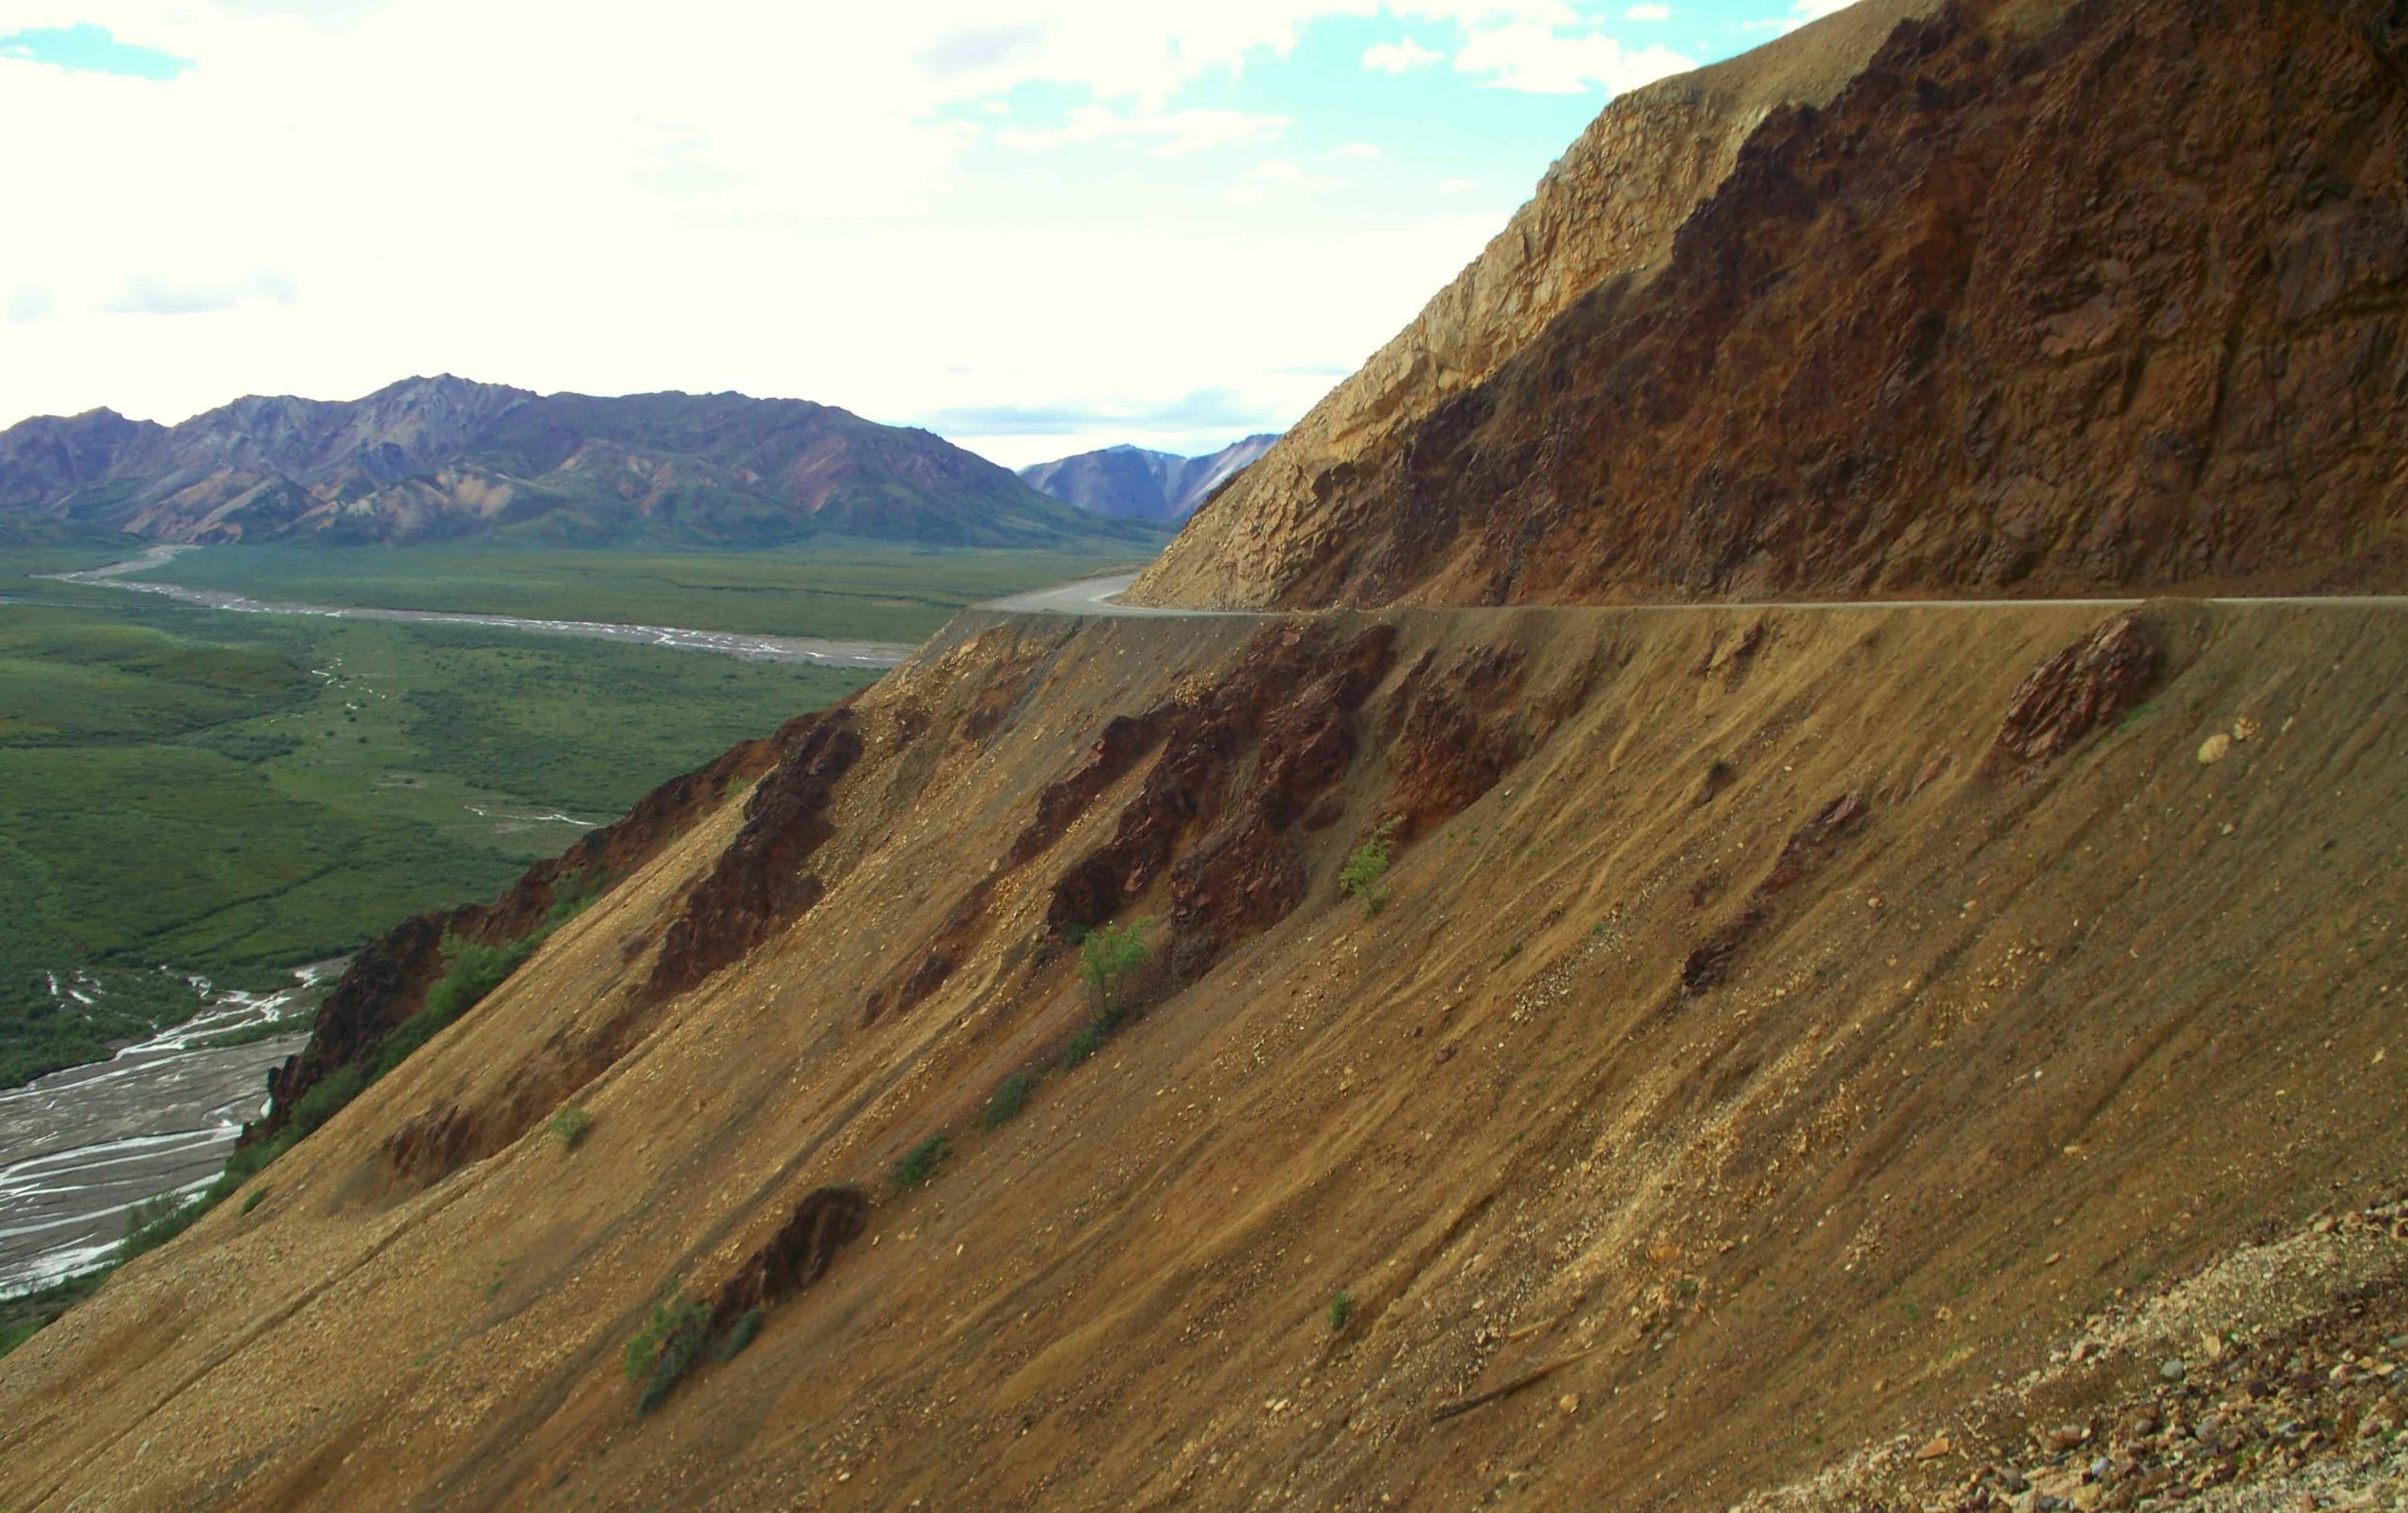 Tan hillside with dusty road cut along it, winding through Alaska's Denali range.